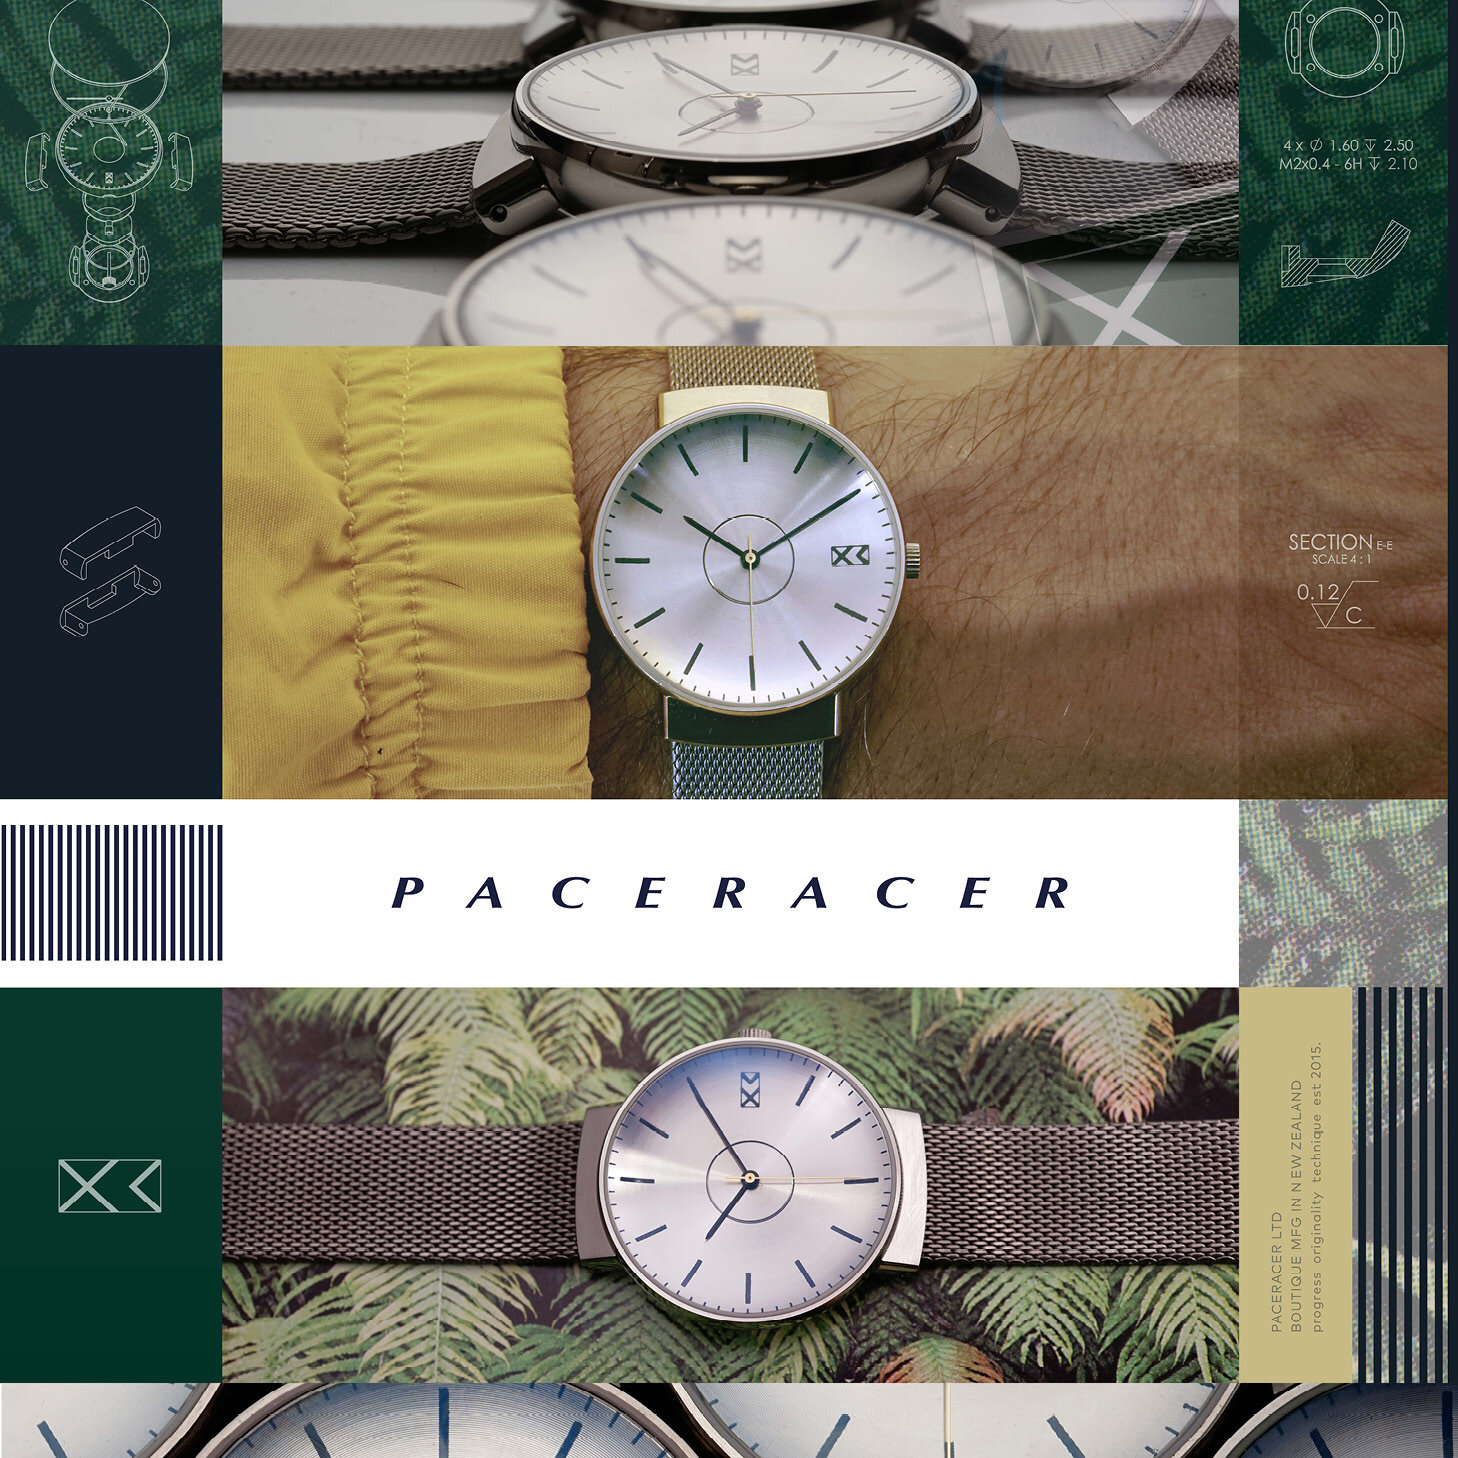 paceracer-watch-company-new-zealand-manual-magazine-brett-band.jpg